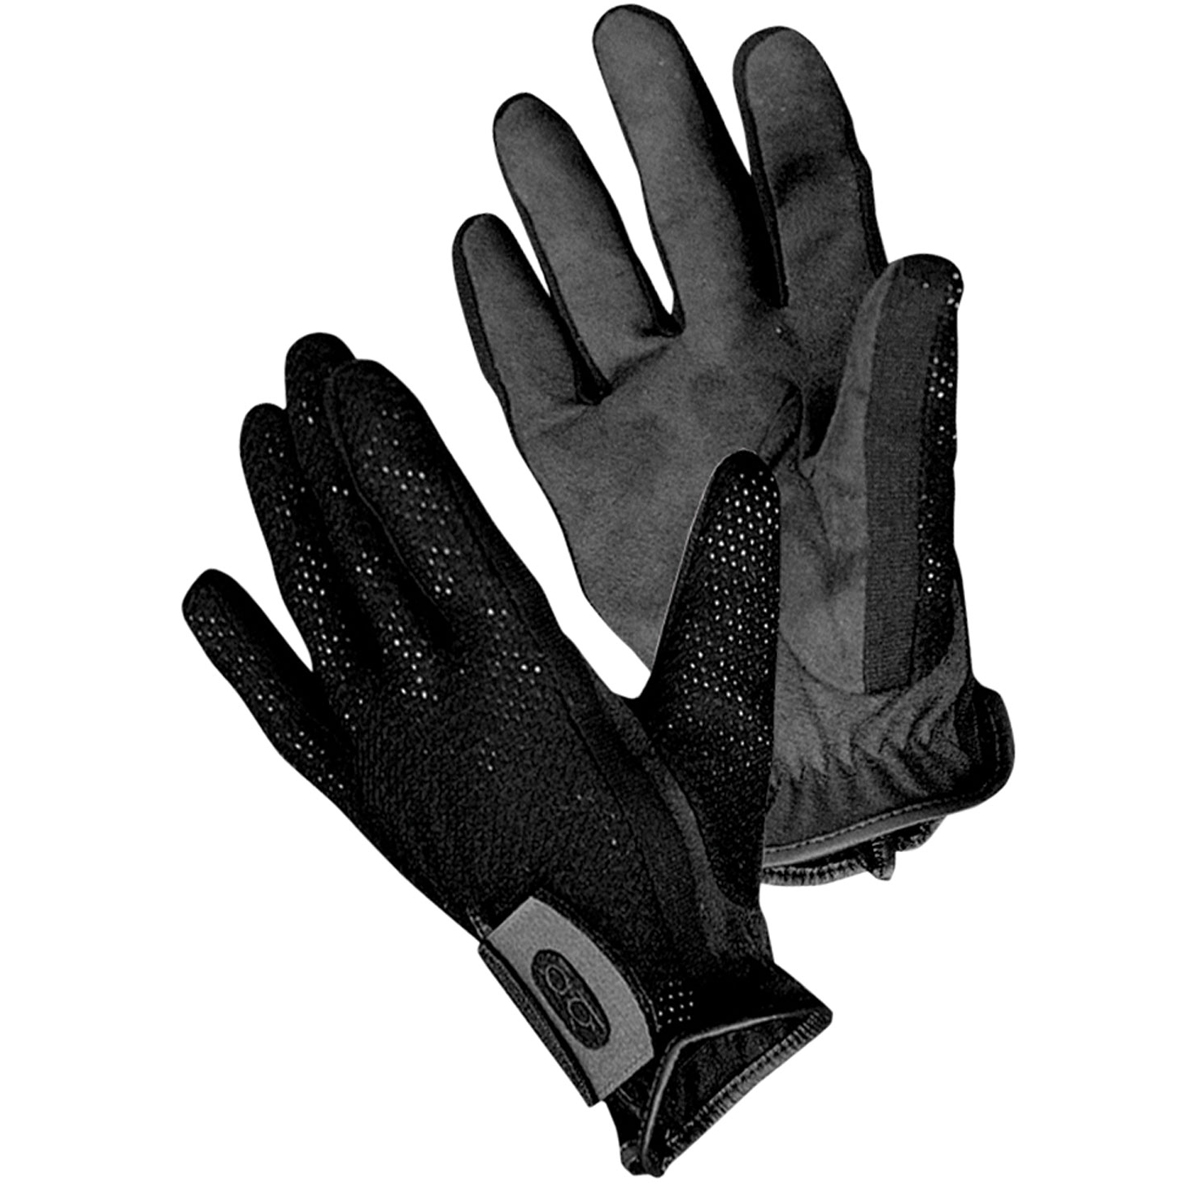 Bob Allen Shotgunner Shooting Gloves, Black, Medium